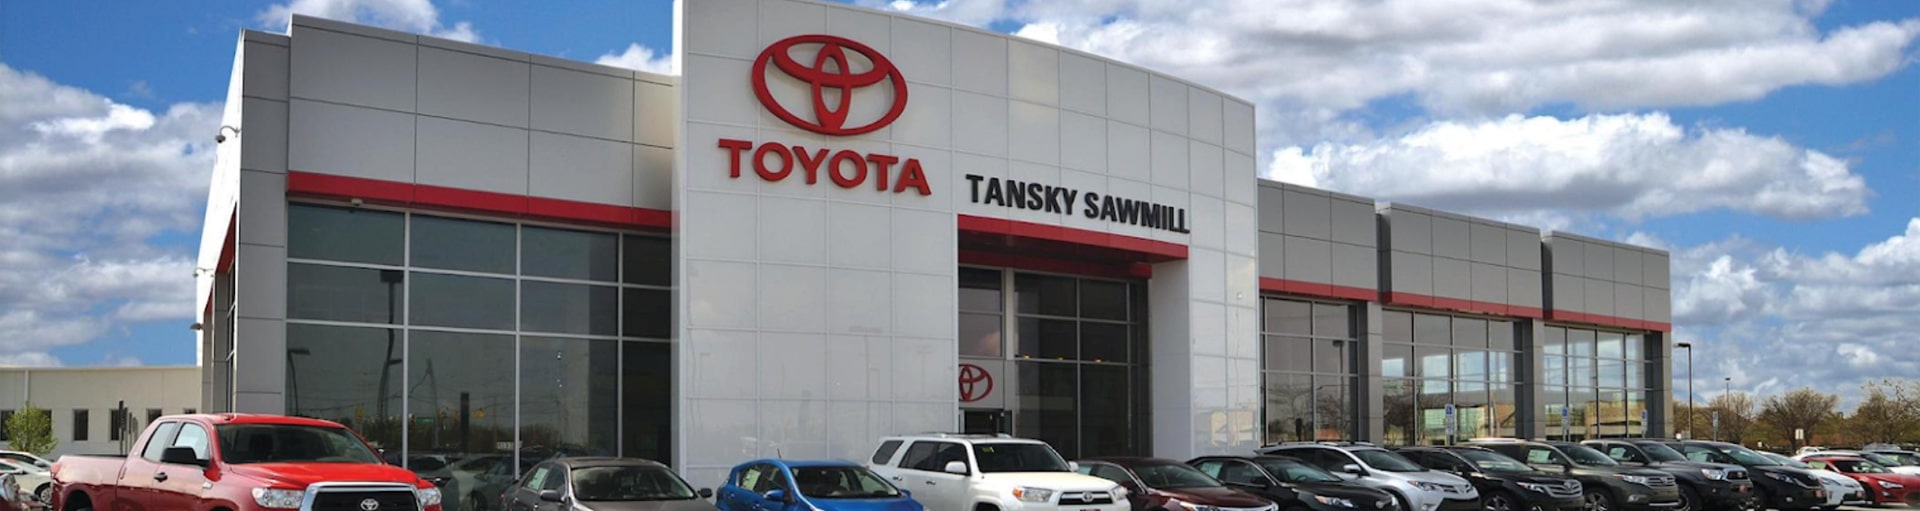 Tansky Sawmill Toyota Collision Body Repairs Service